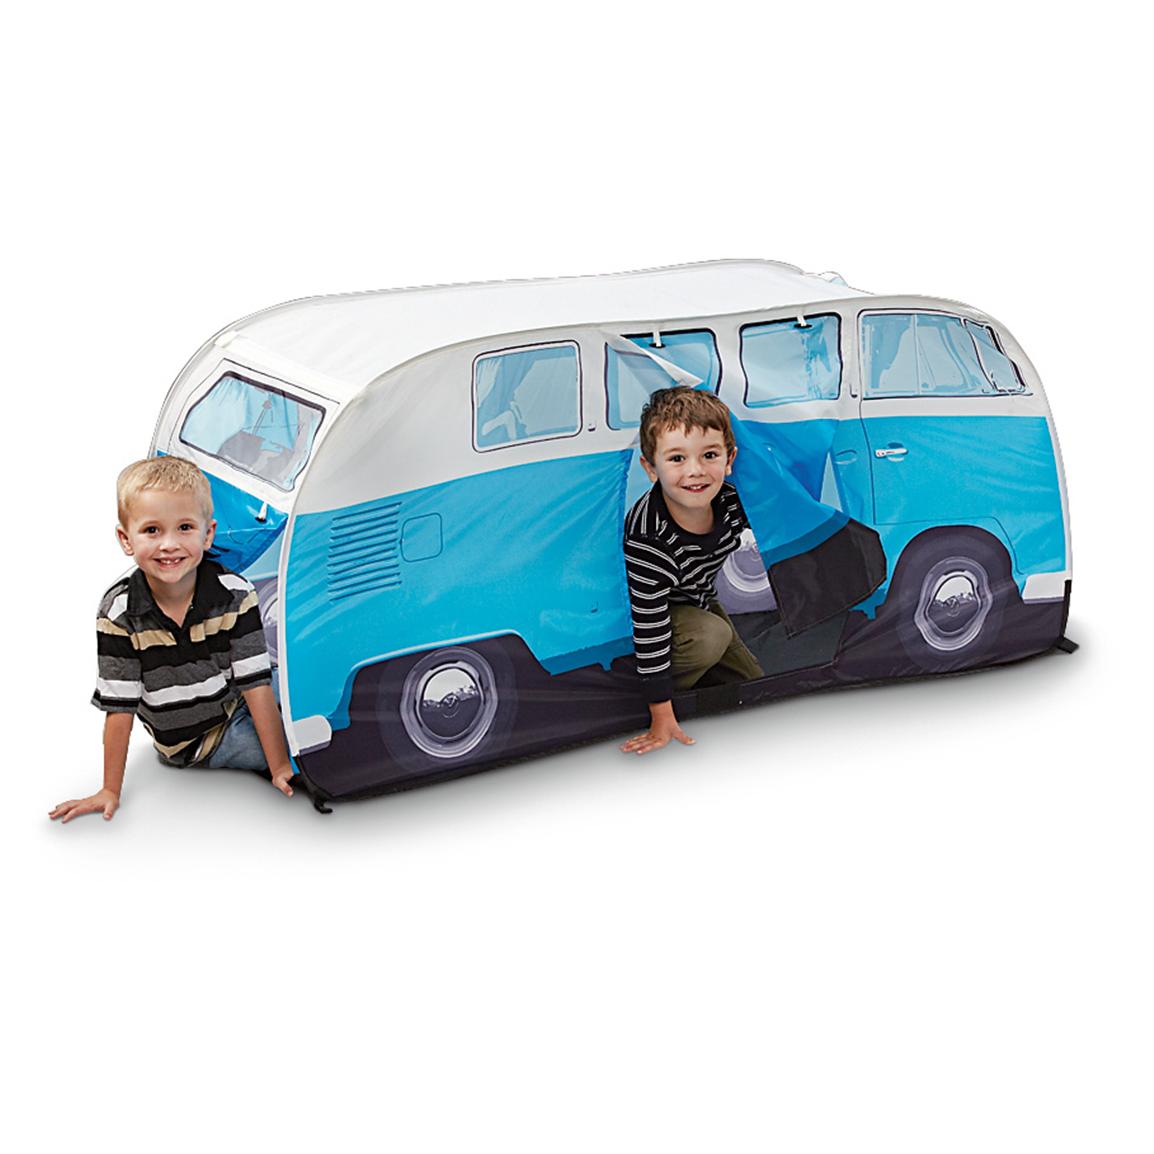 Imperial Fabrikant Blind vertrouwen Volkswagen® Camper Van Play Tent - 422177, Recreation at Sportsman's Guide